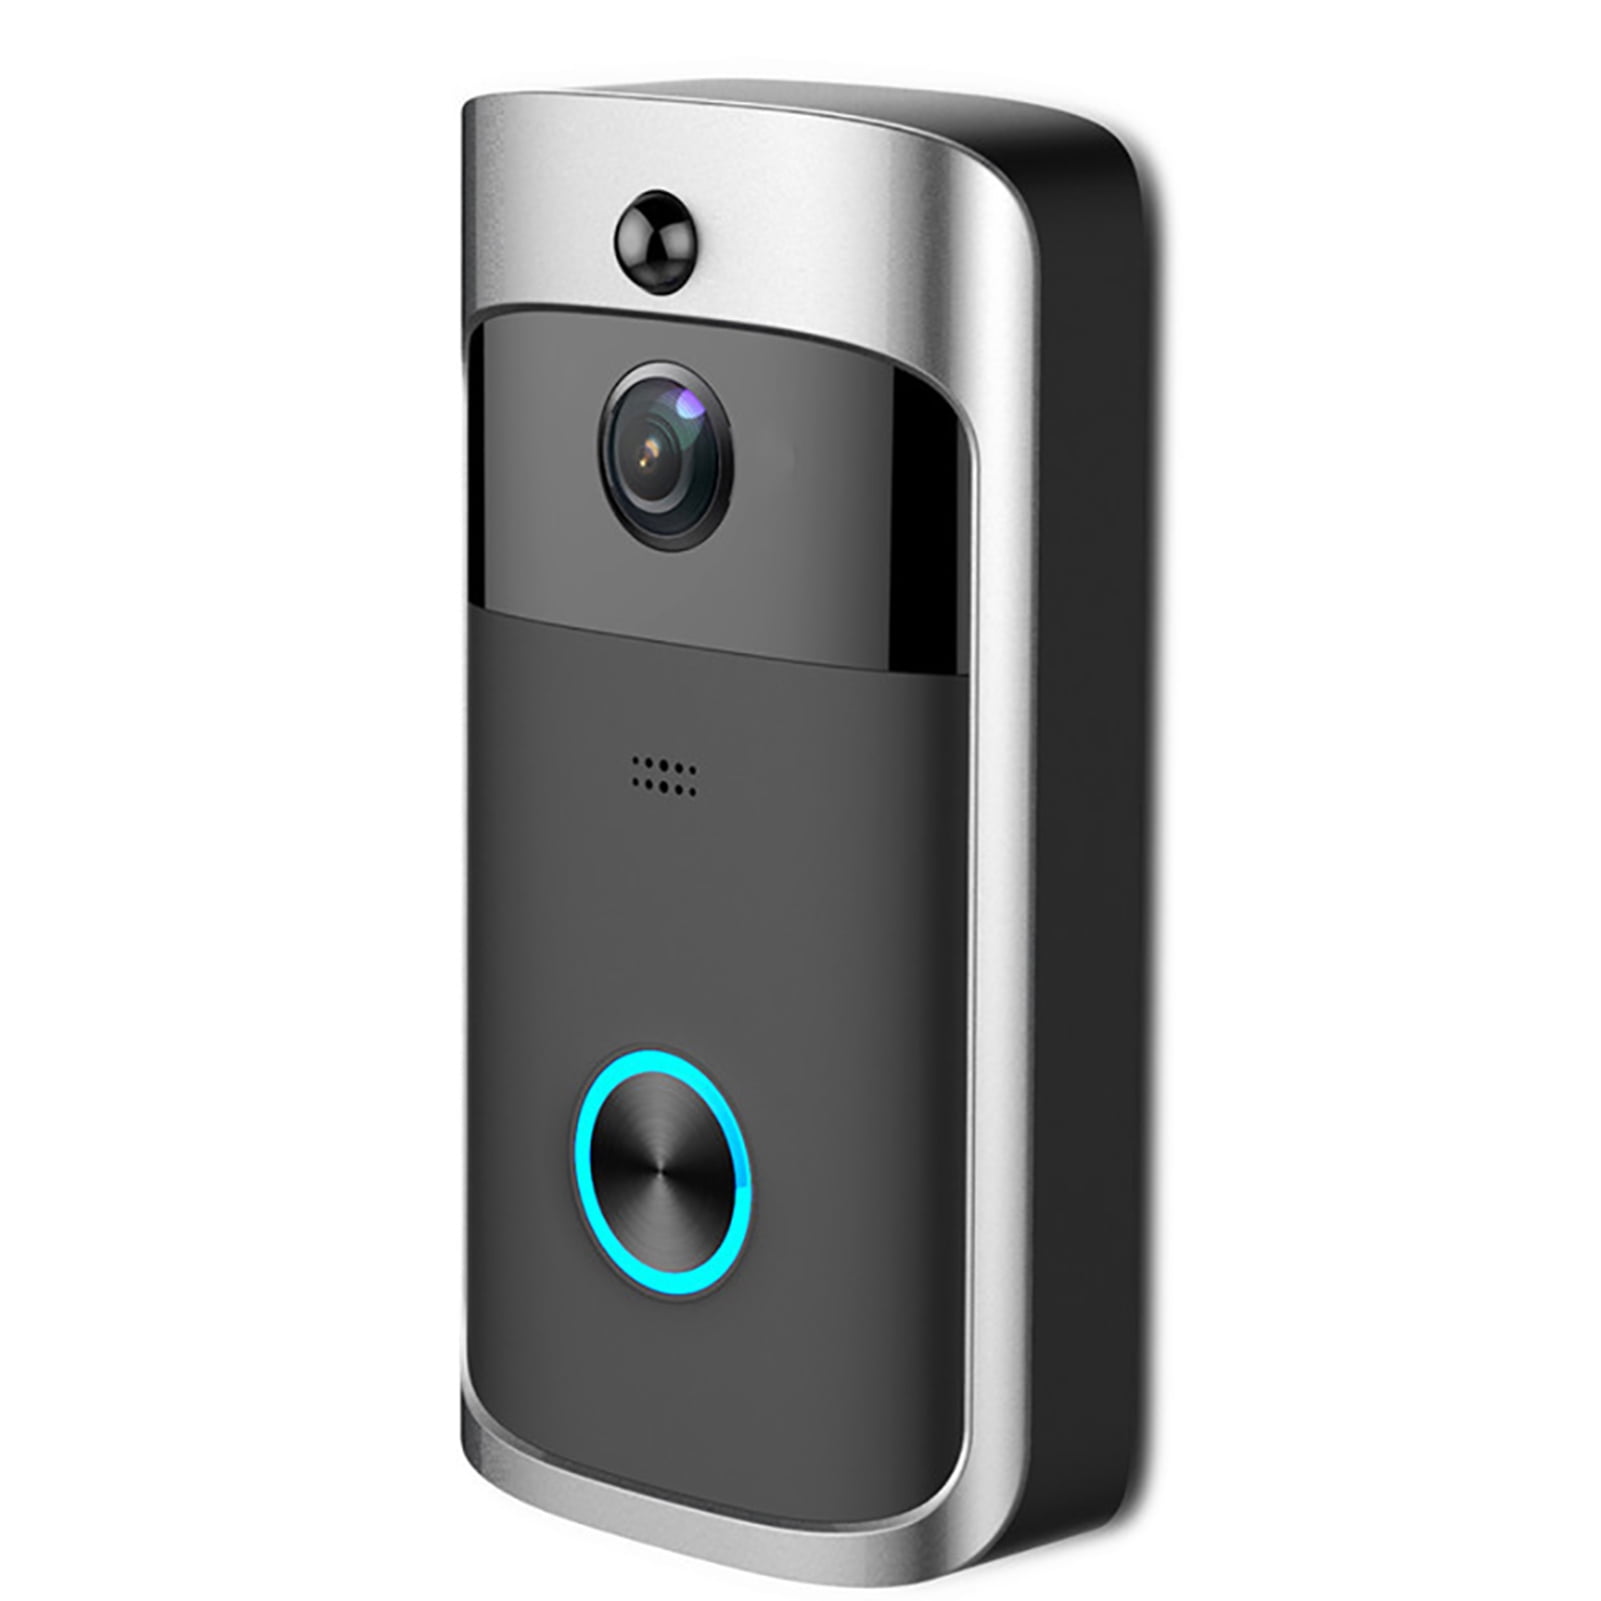 Wirelessly Smart DoorBell 720P Camera WiFi Visual Video Phone Door Bell 2-way Audio Video Doorbell Support Infrared Night View PIR Motion Sensor Android IOS APP Remote Control